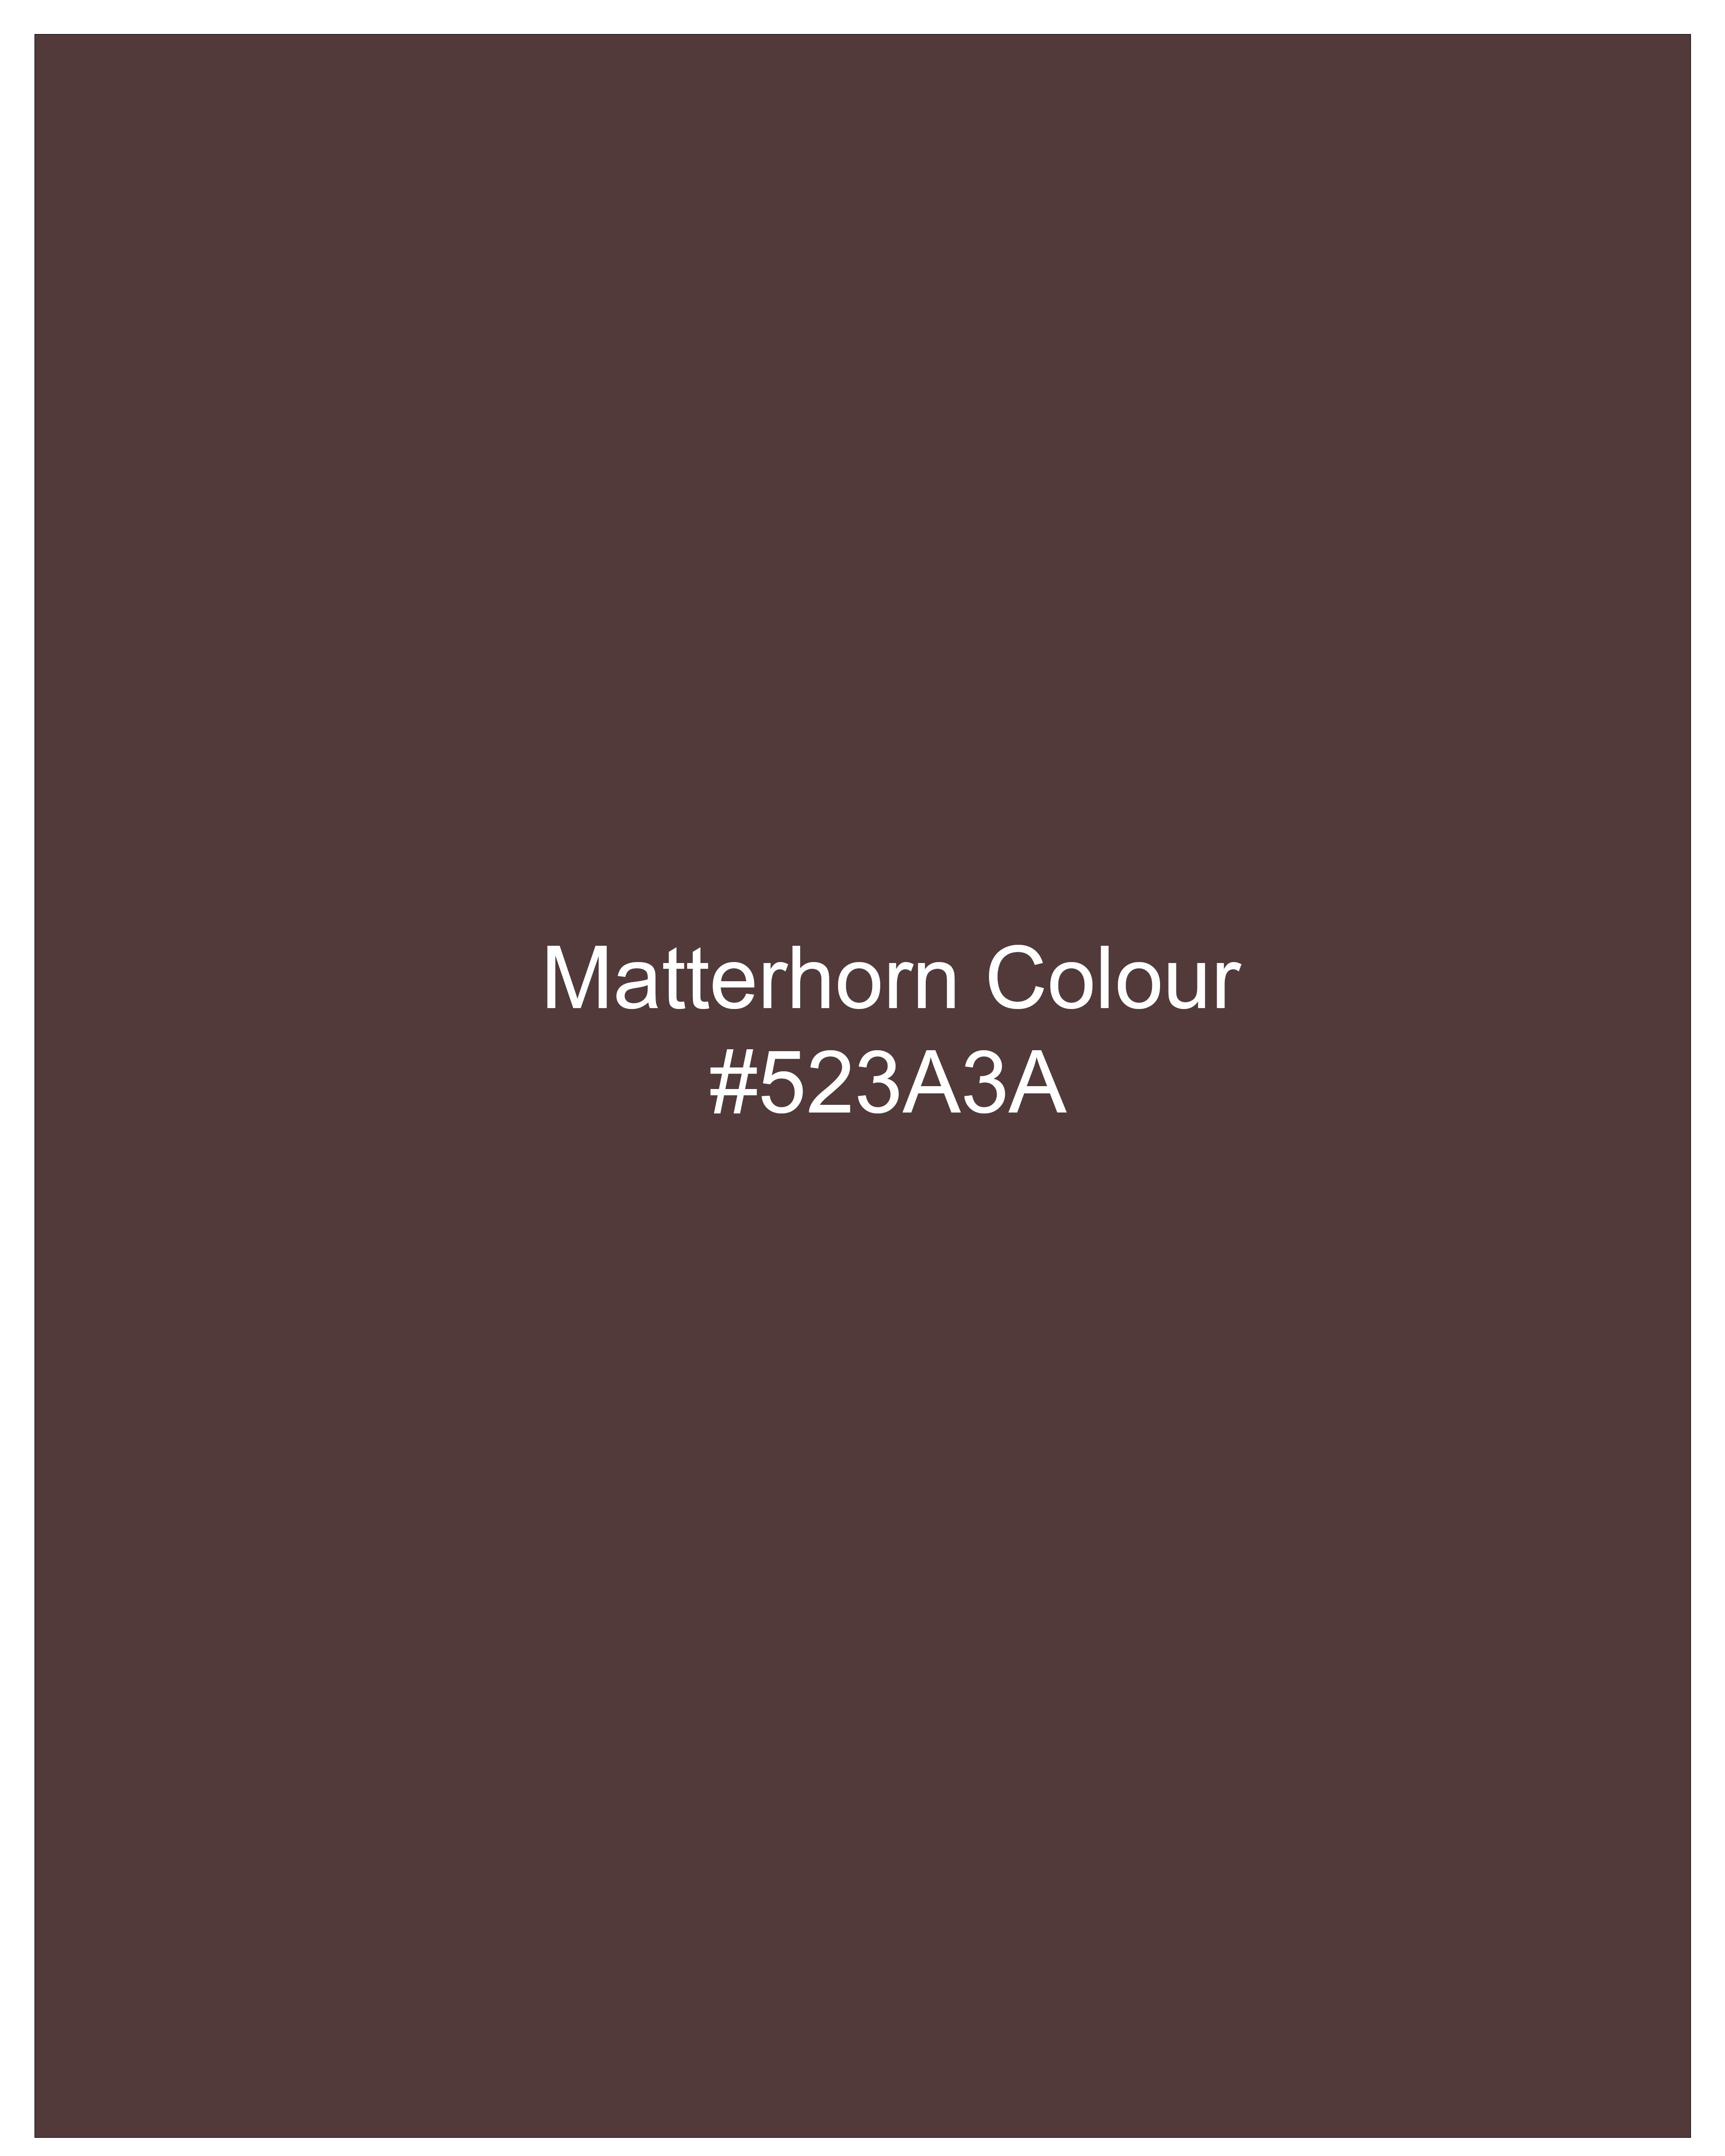 Matterhorn Brown Textured Pant  T2244-28, T2244-30, T2244-32, T2244-34, T2244-36, T2244-38, T2244-40, T2244-42, T2244-44